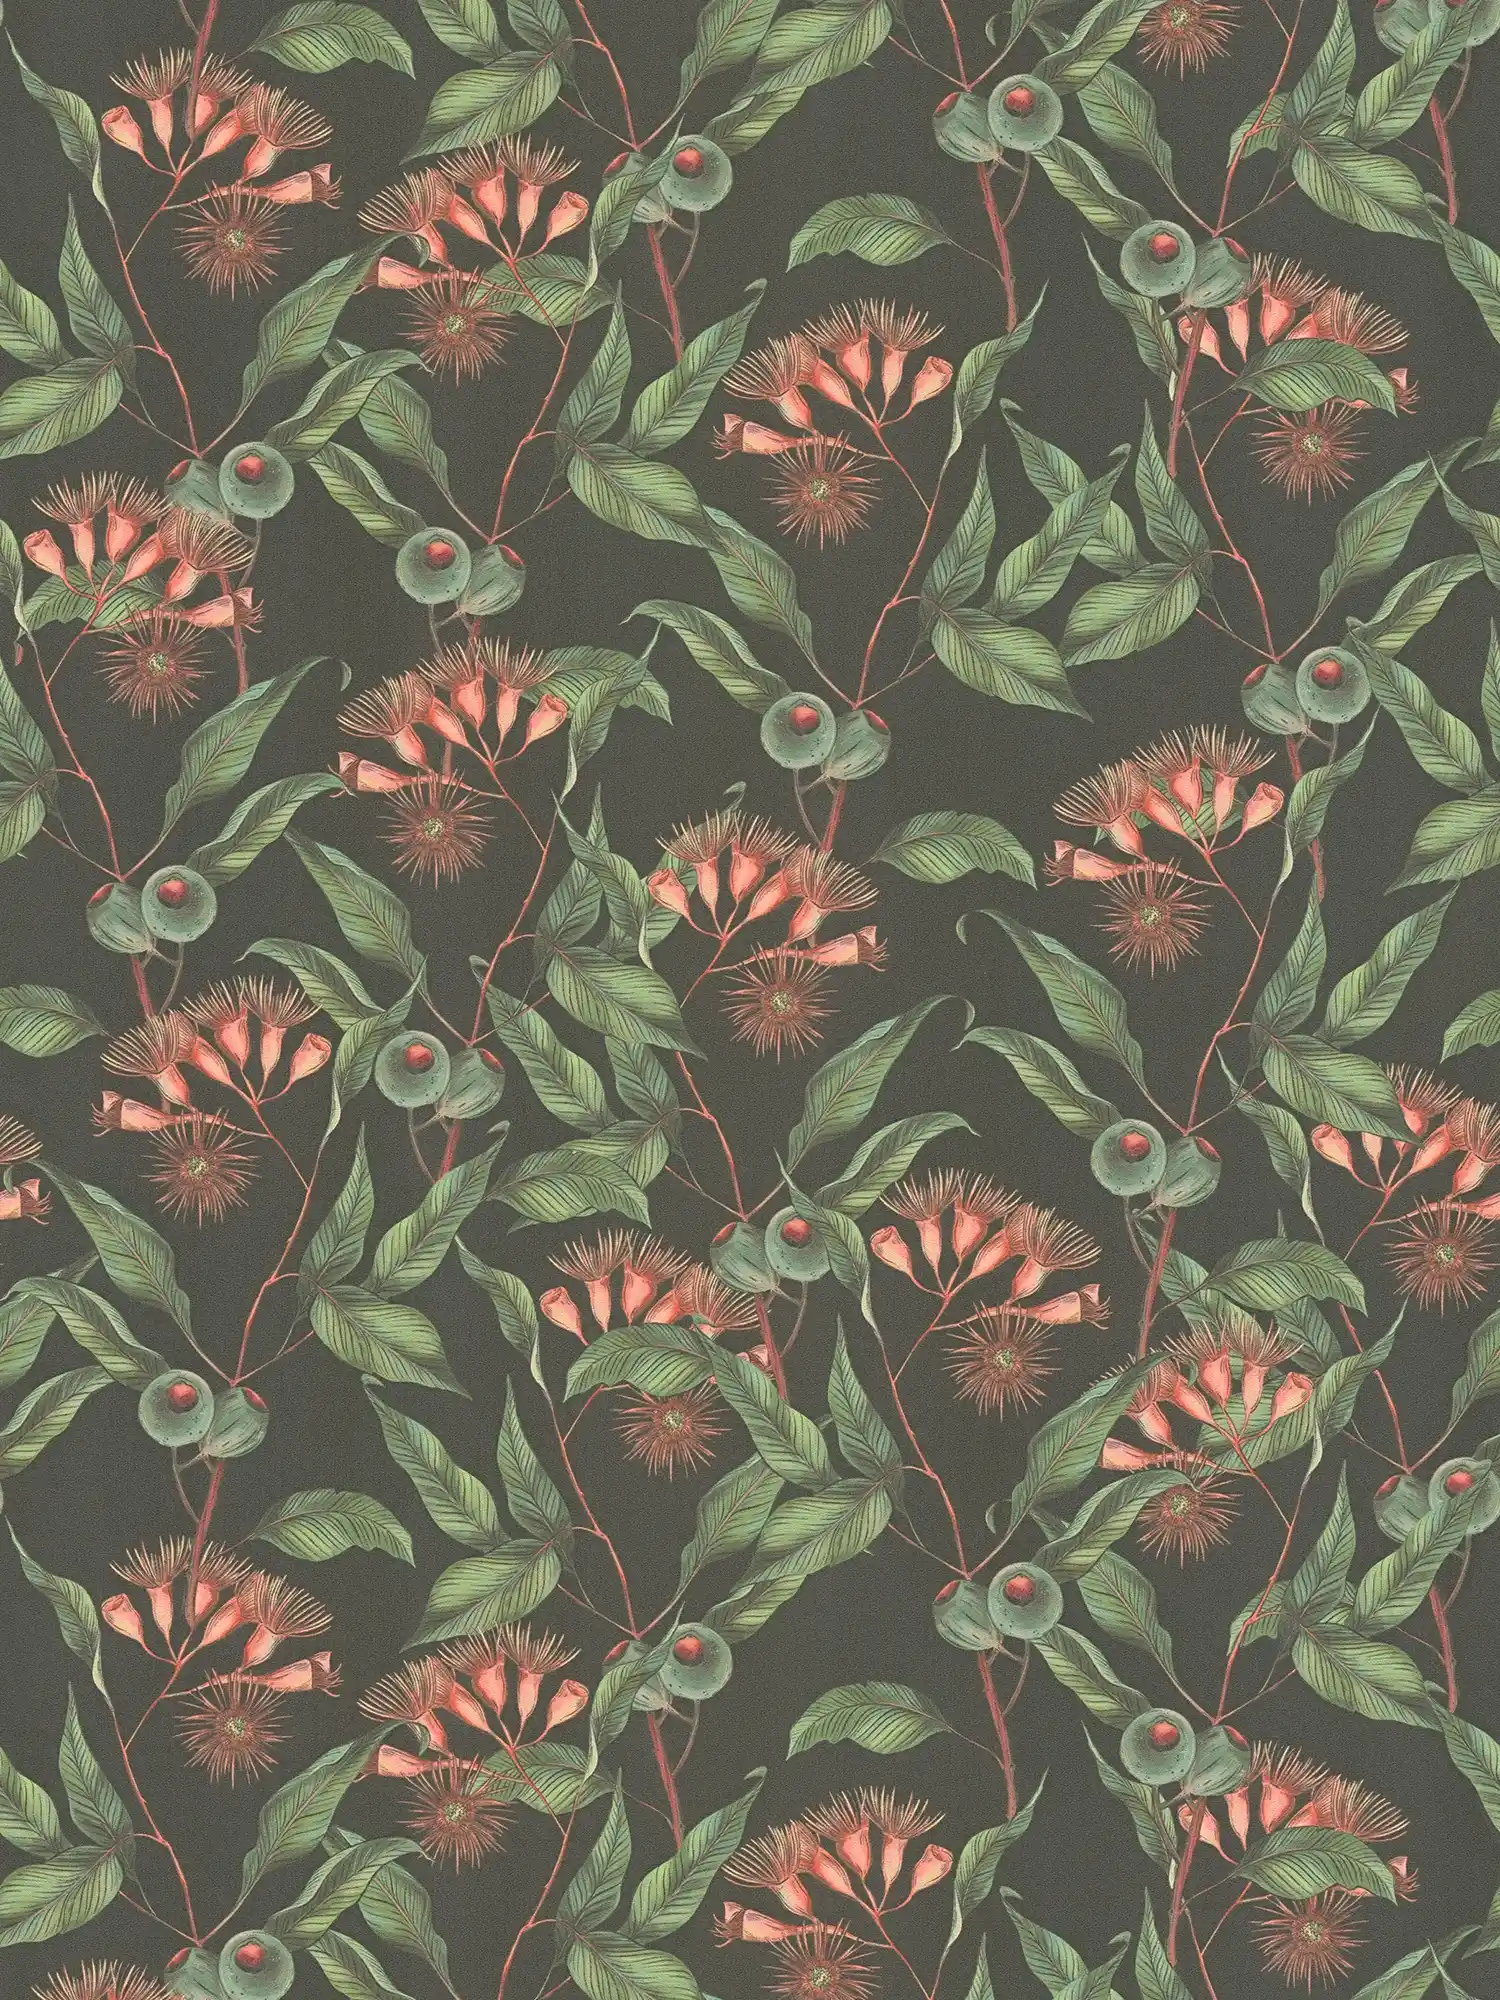 Floral wallpaper modern with leaves & flowers textured matt - black, green, red
